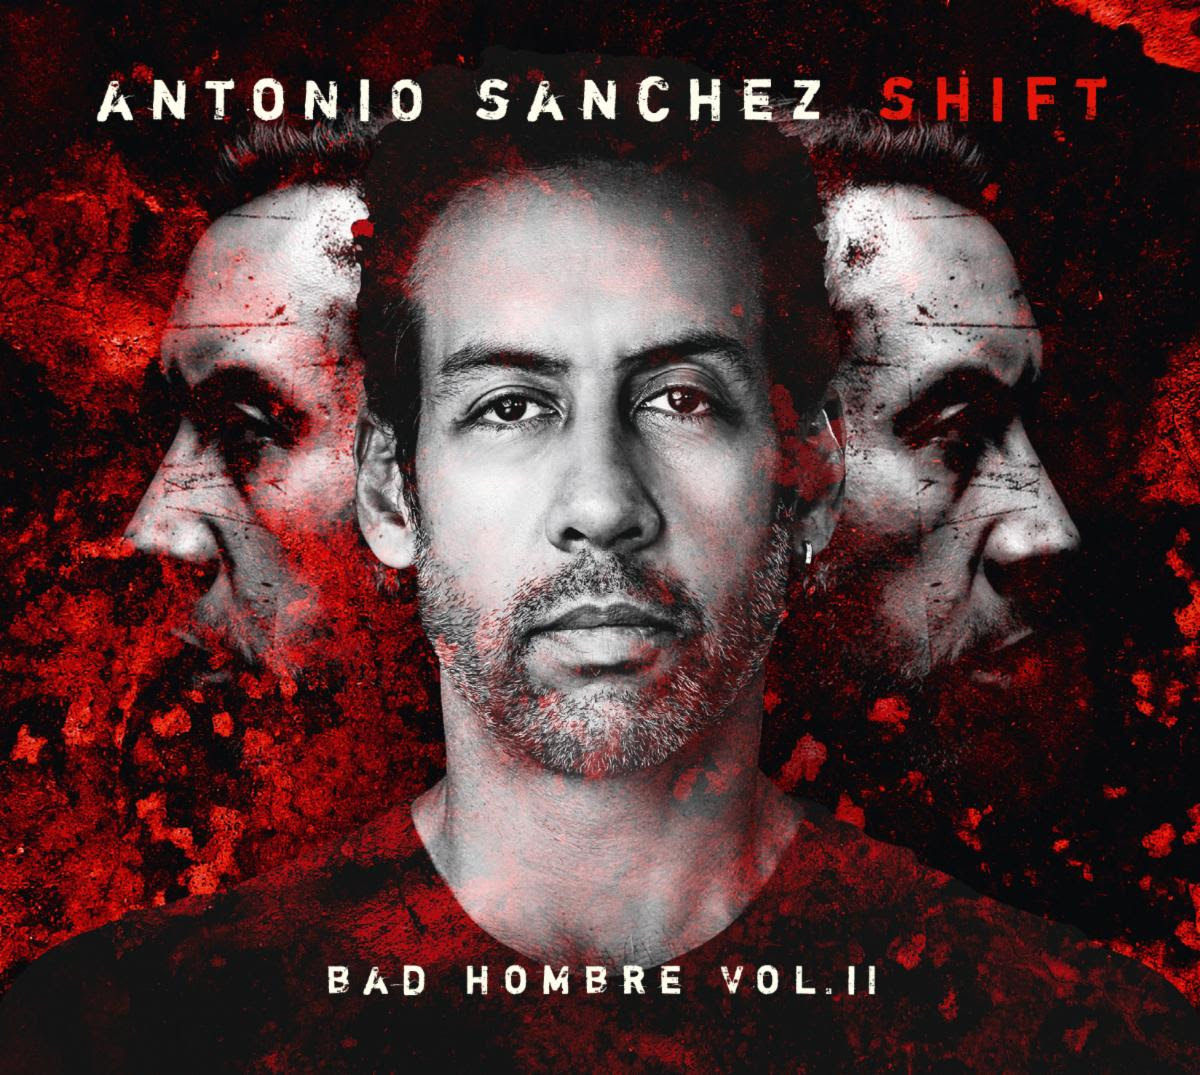 Antonio Sanchez Shift print.jpg